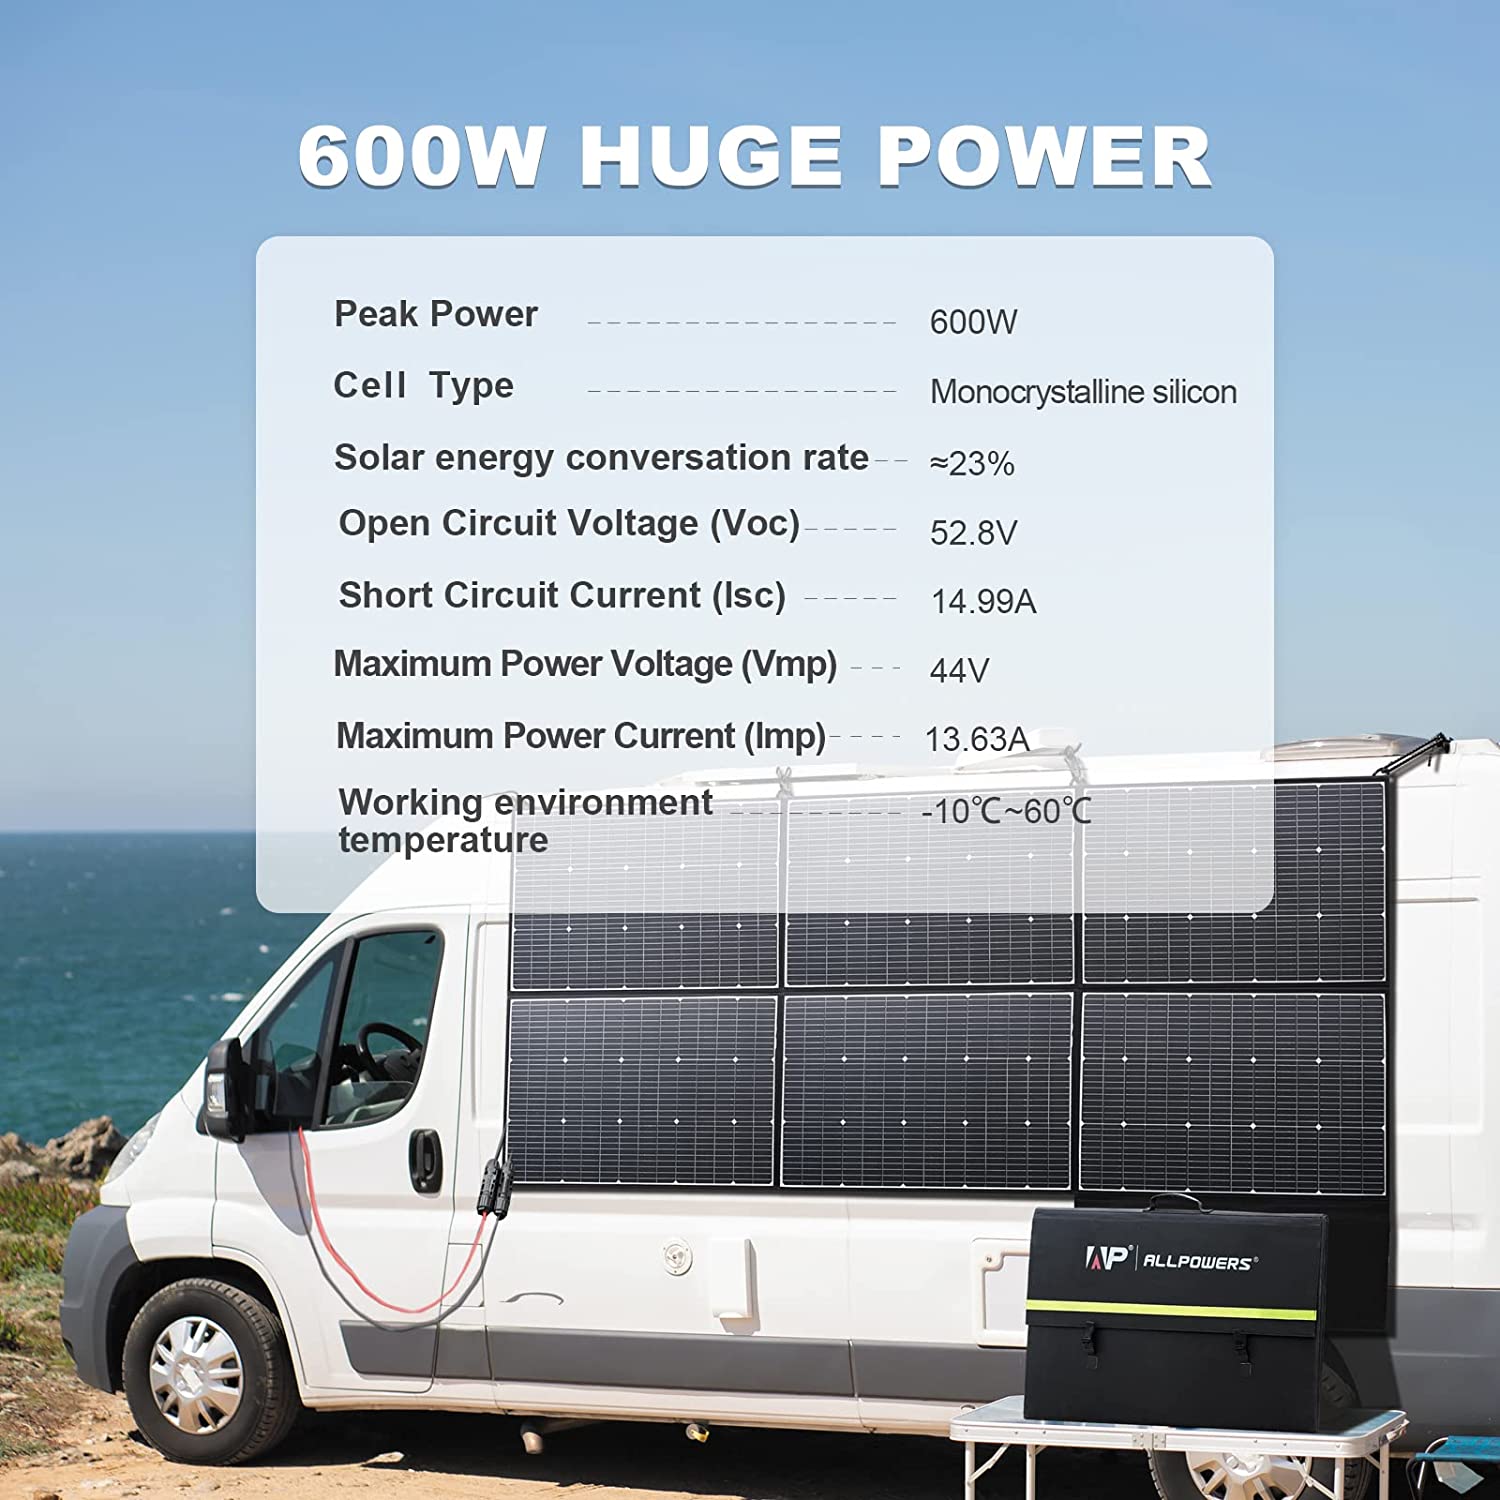 ALLPOWERS Solar Generator Kit 1800W (R1500 + SP039 600W Solar Panel)